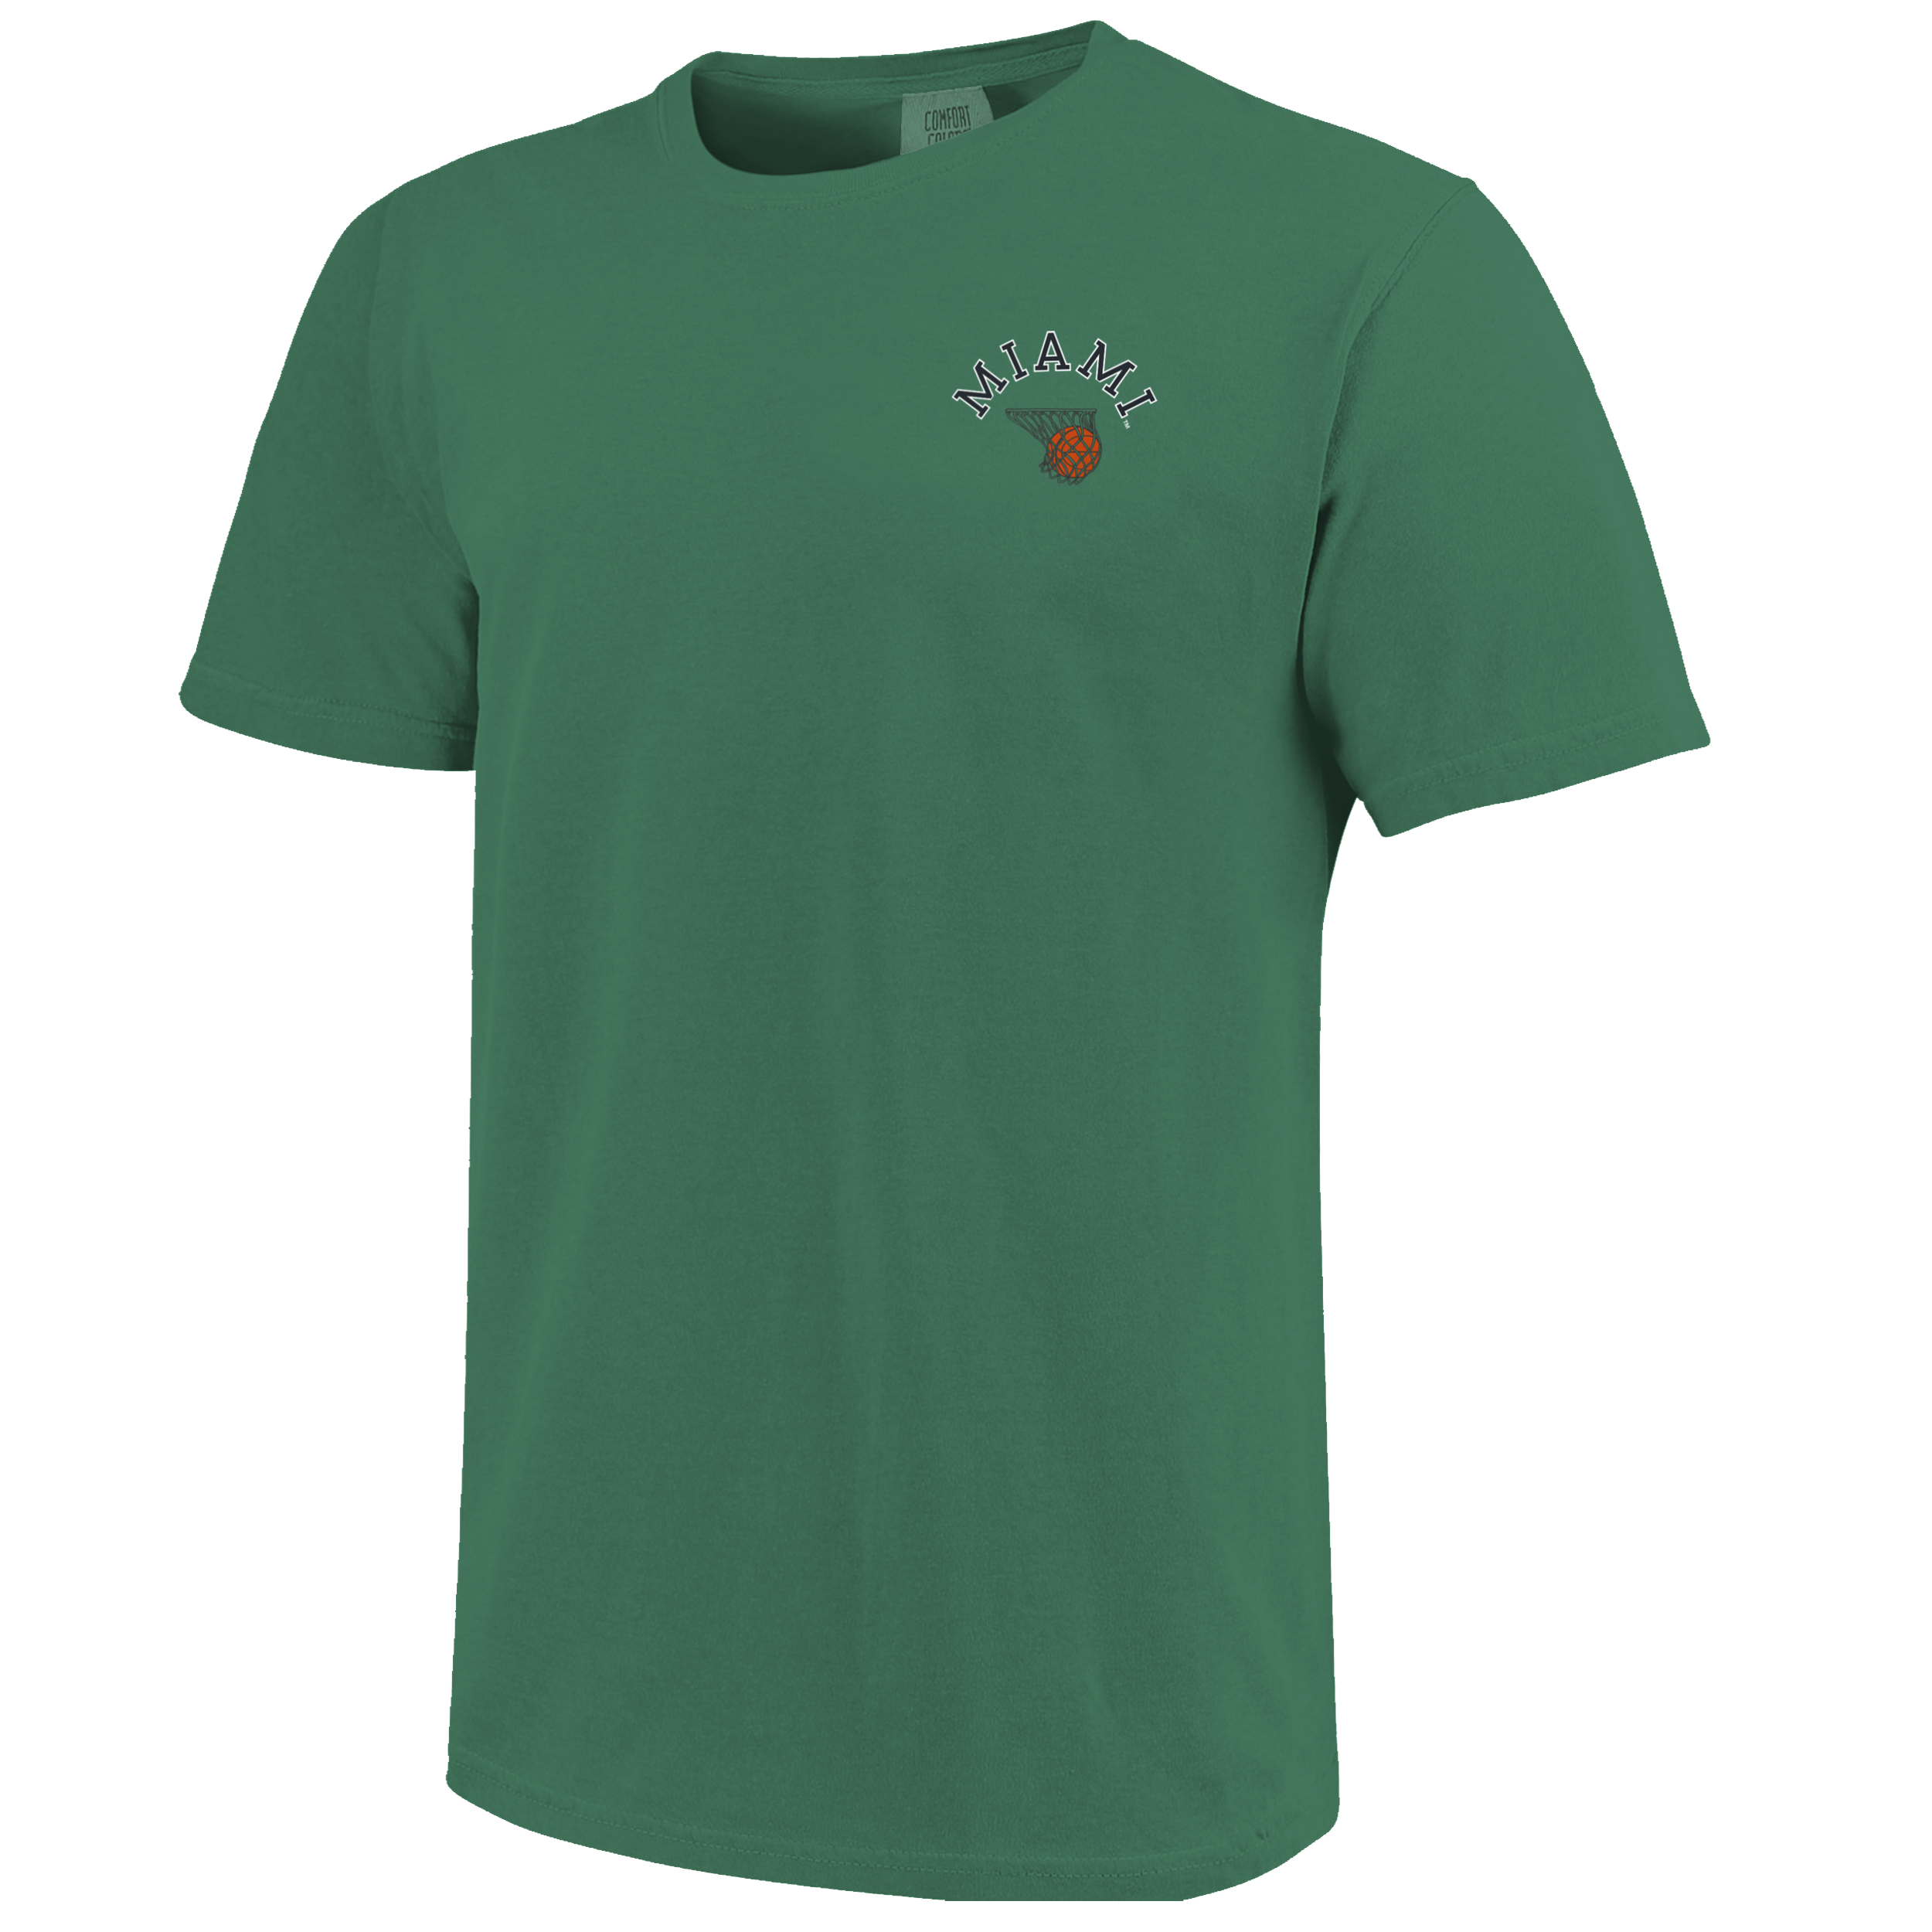 Miami Hurricanes Swish Basketball Net T-Shirt - Comfort Colors - Grass Green